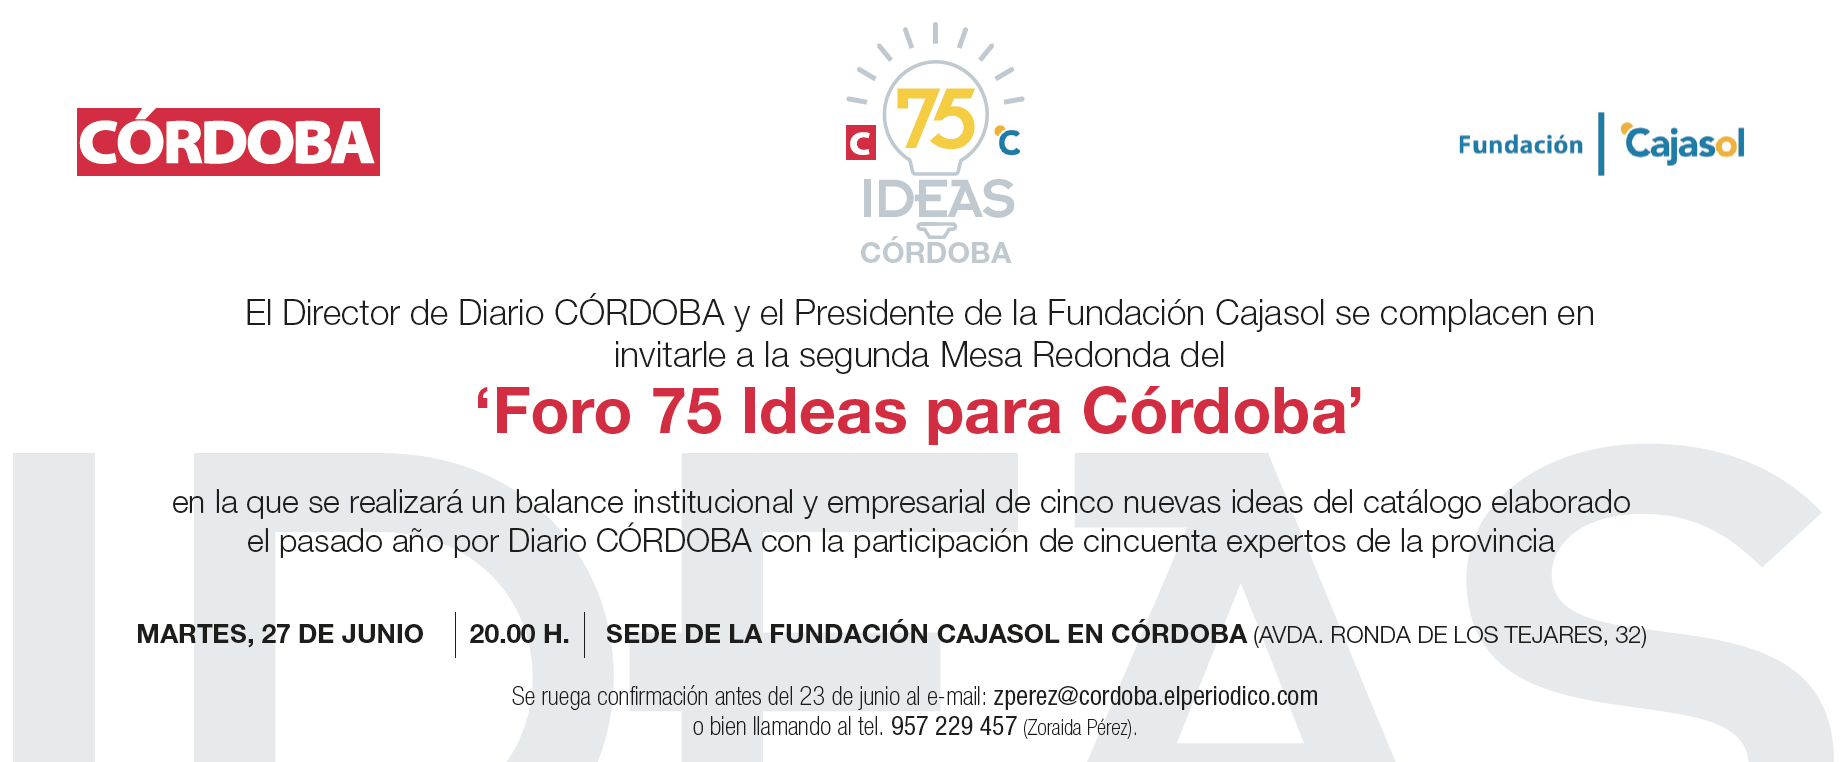 Invitación a la segunda mesa redonda del Foro '75 ideas para Córdoba'